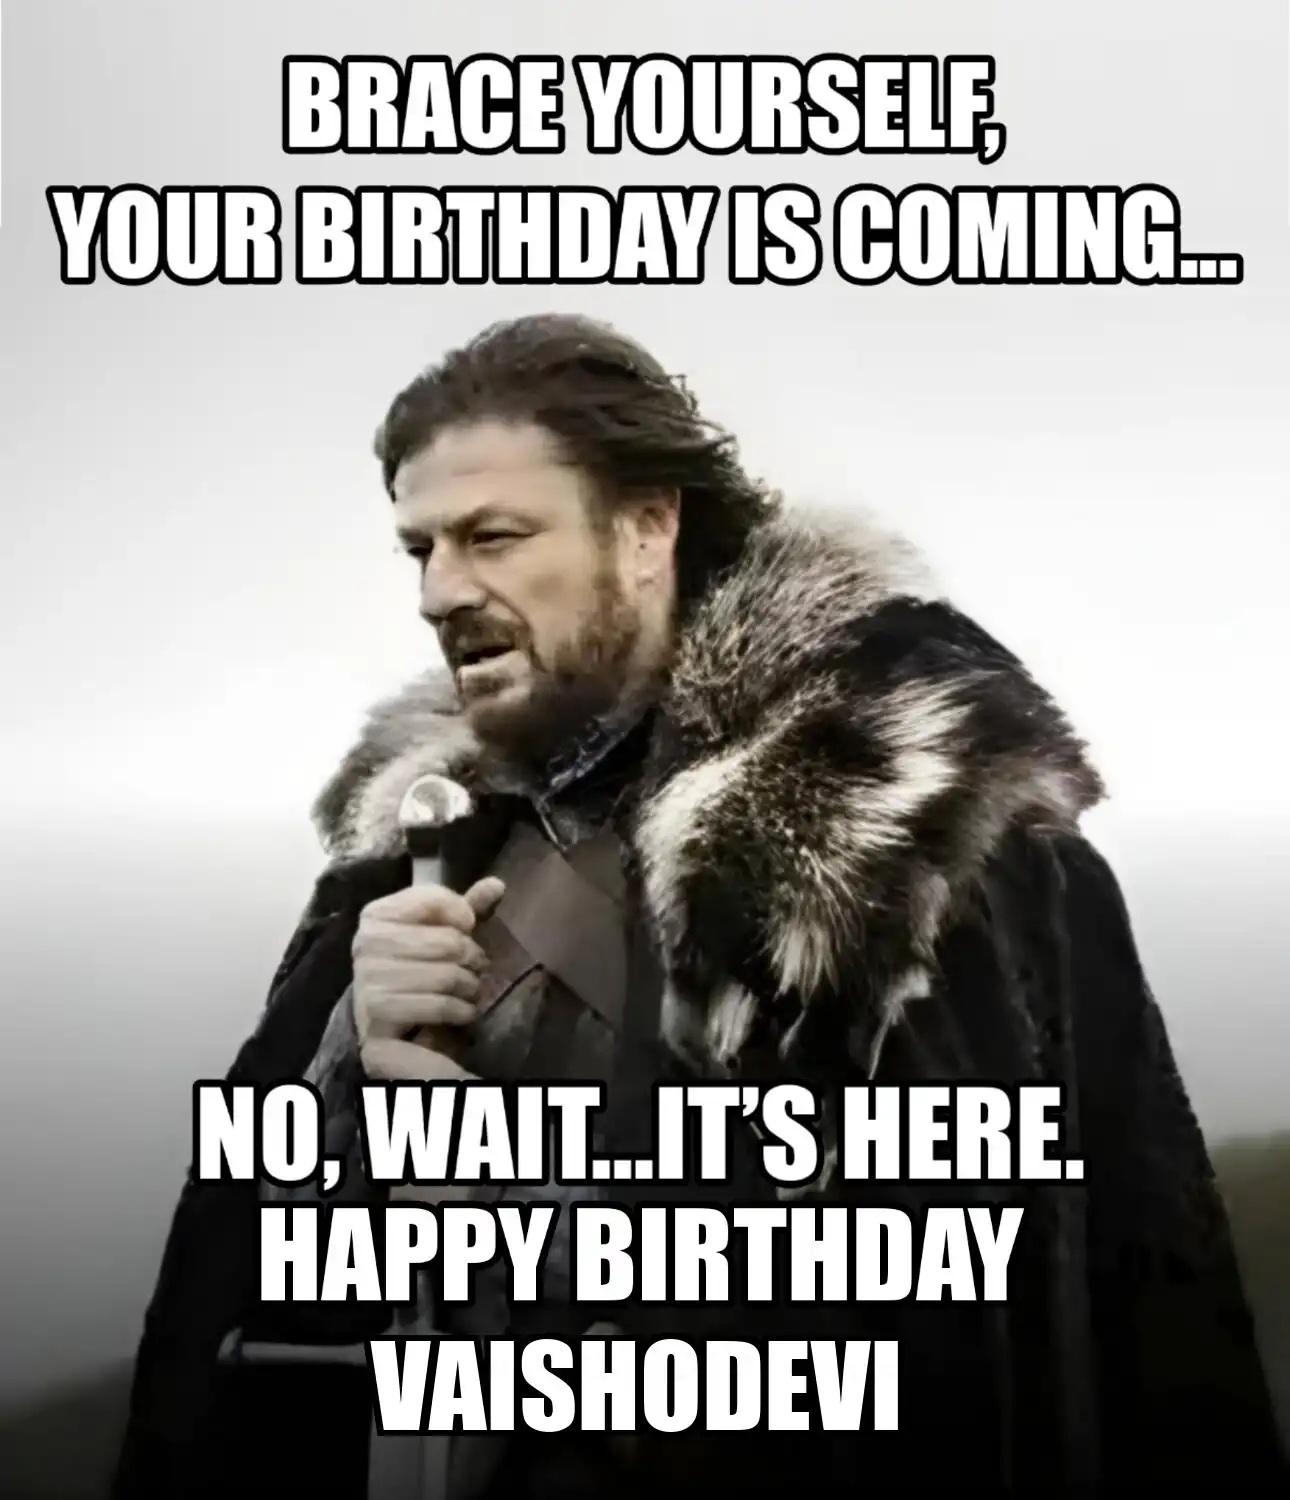 Happy Birthday Vaishodevi Brace Yourself Your Birthday Is Coming Meme